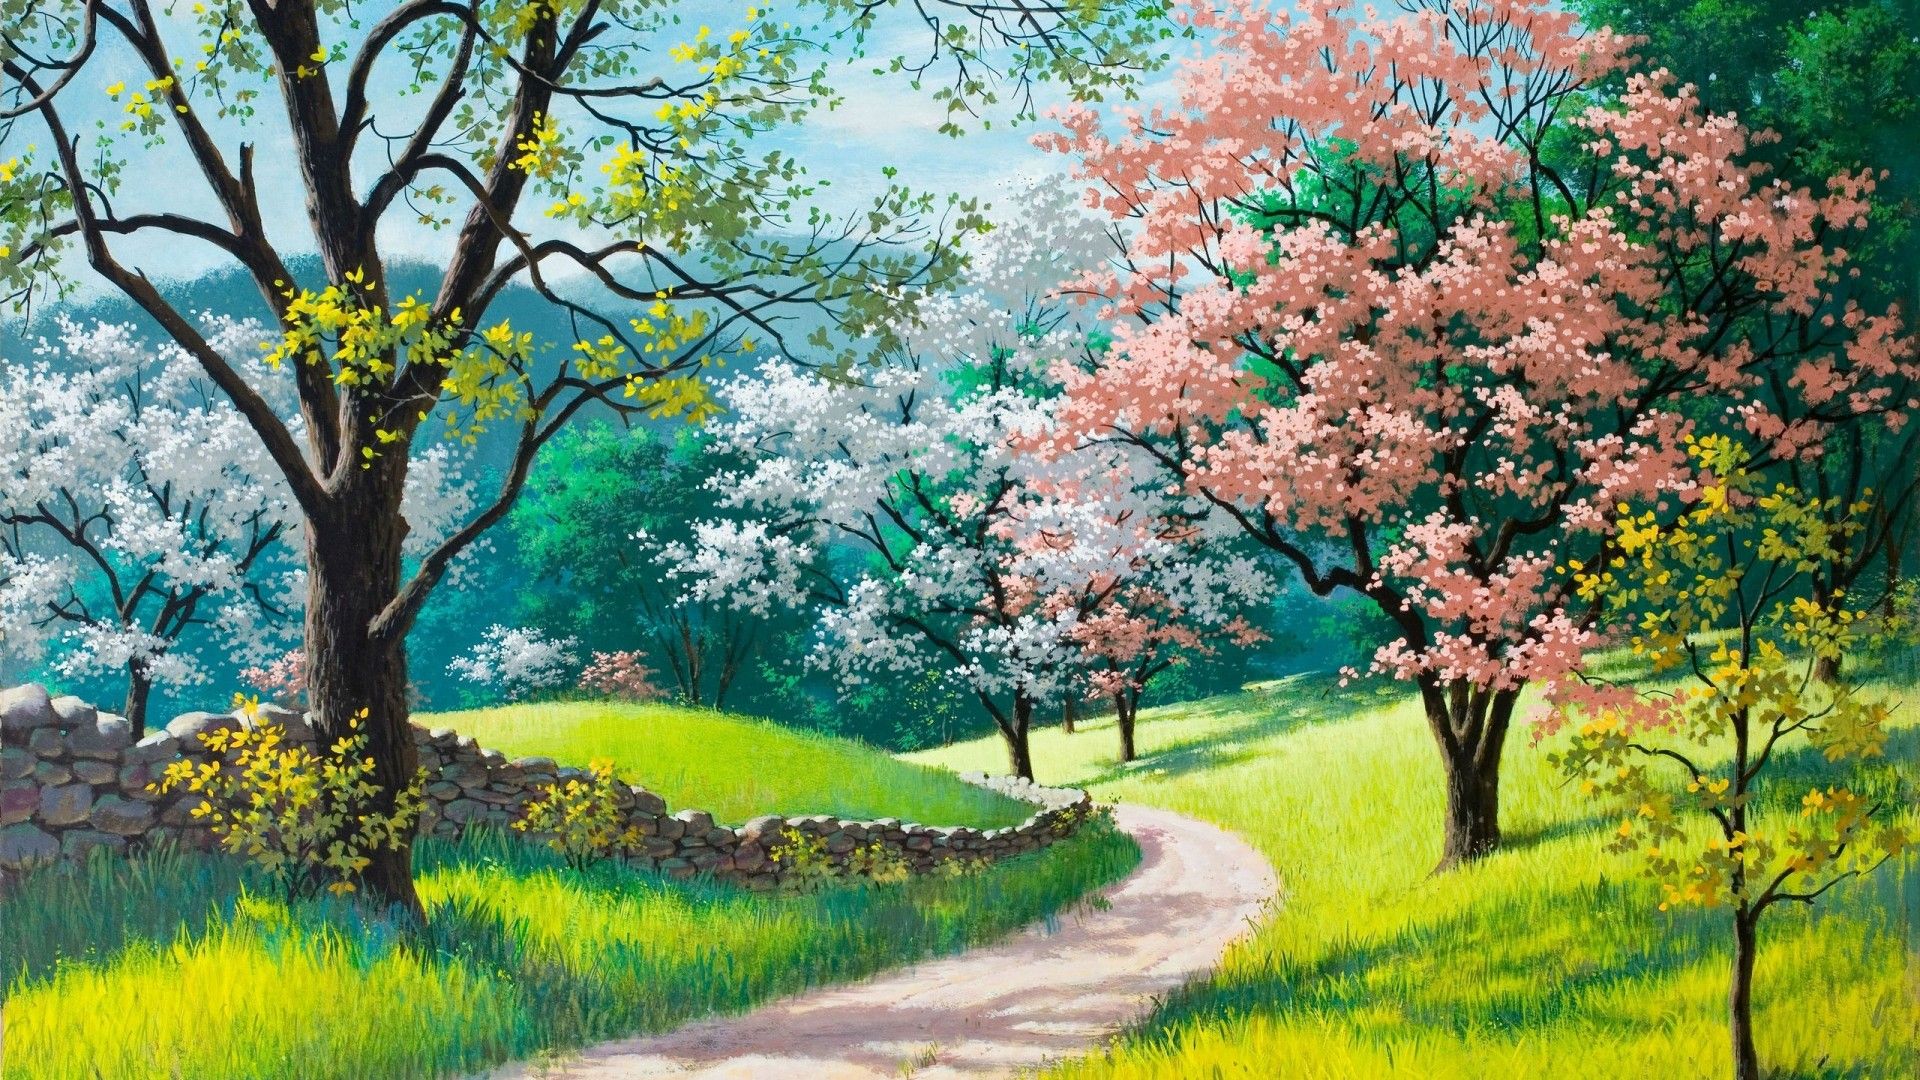 Spring Nature Wallpaper 1920x1080 57001